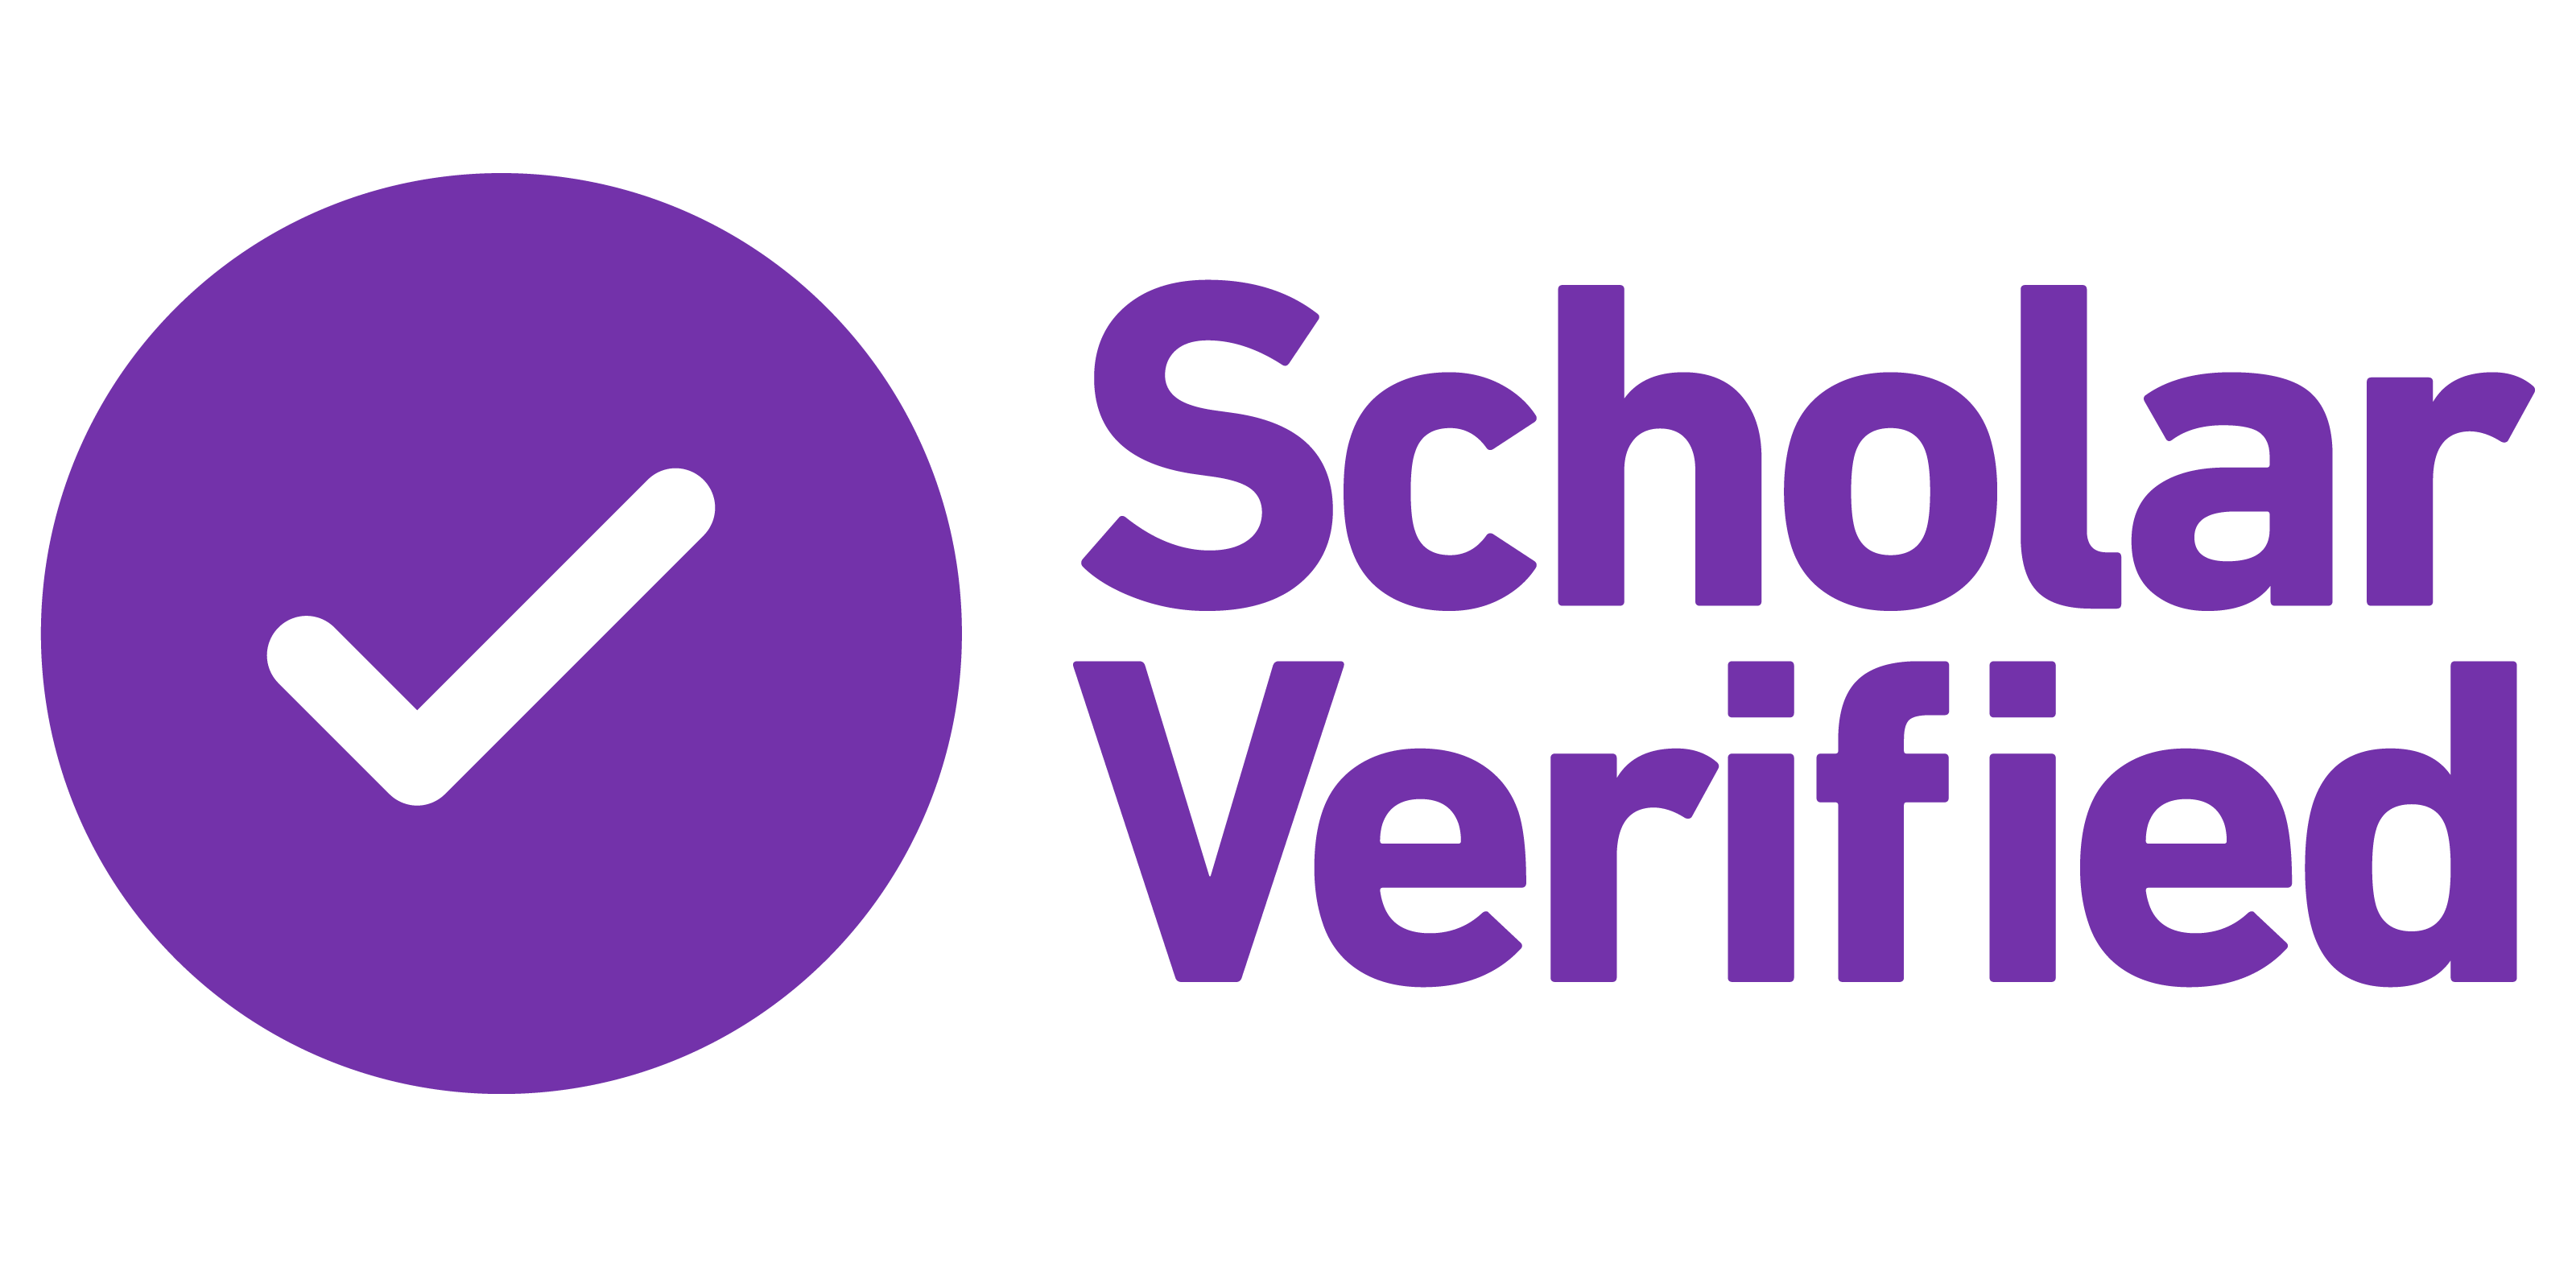 Scholar verified